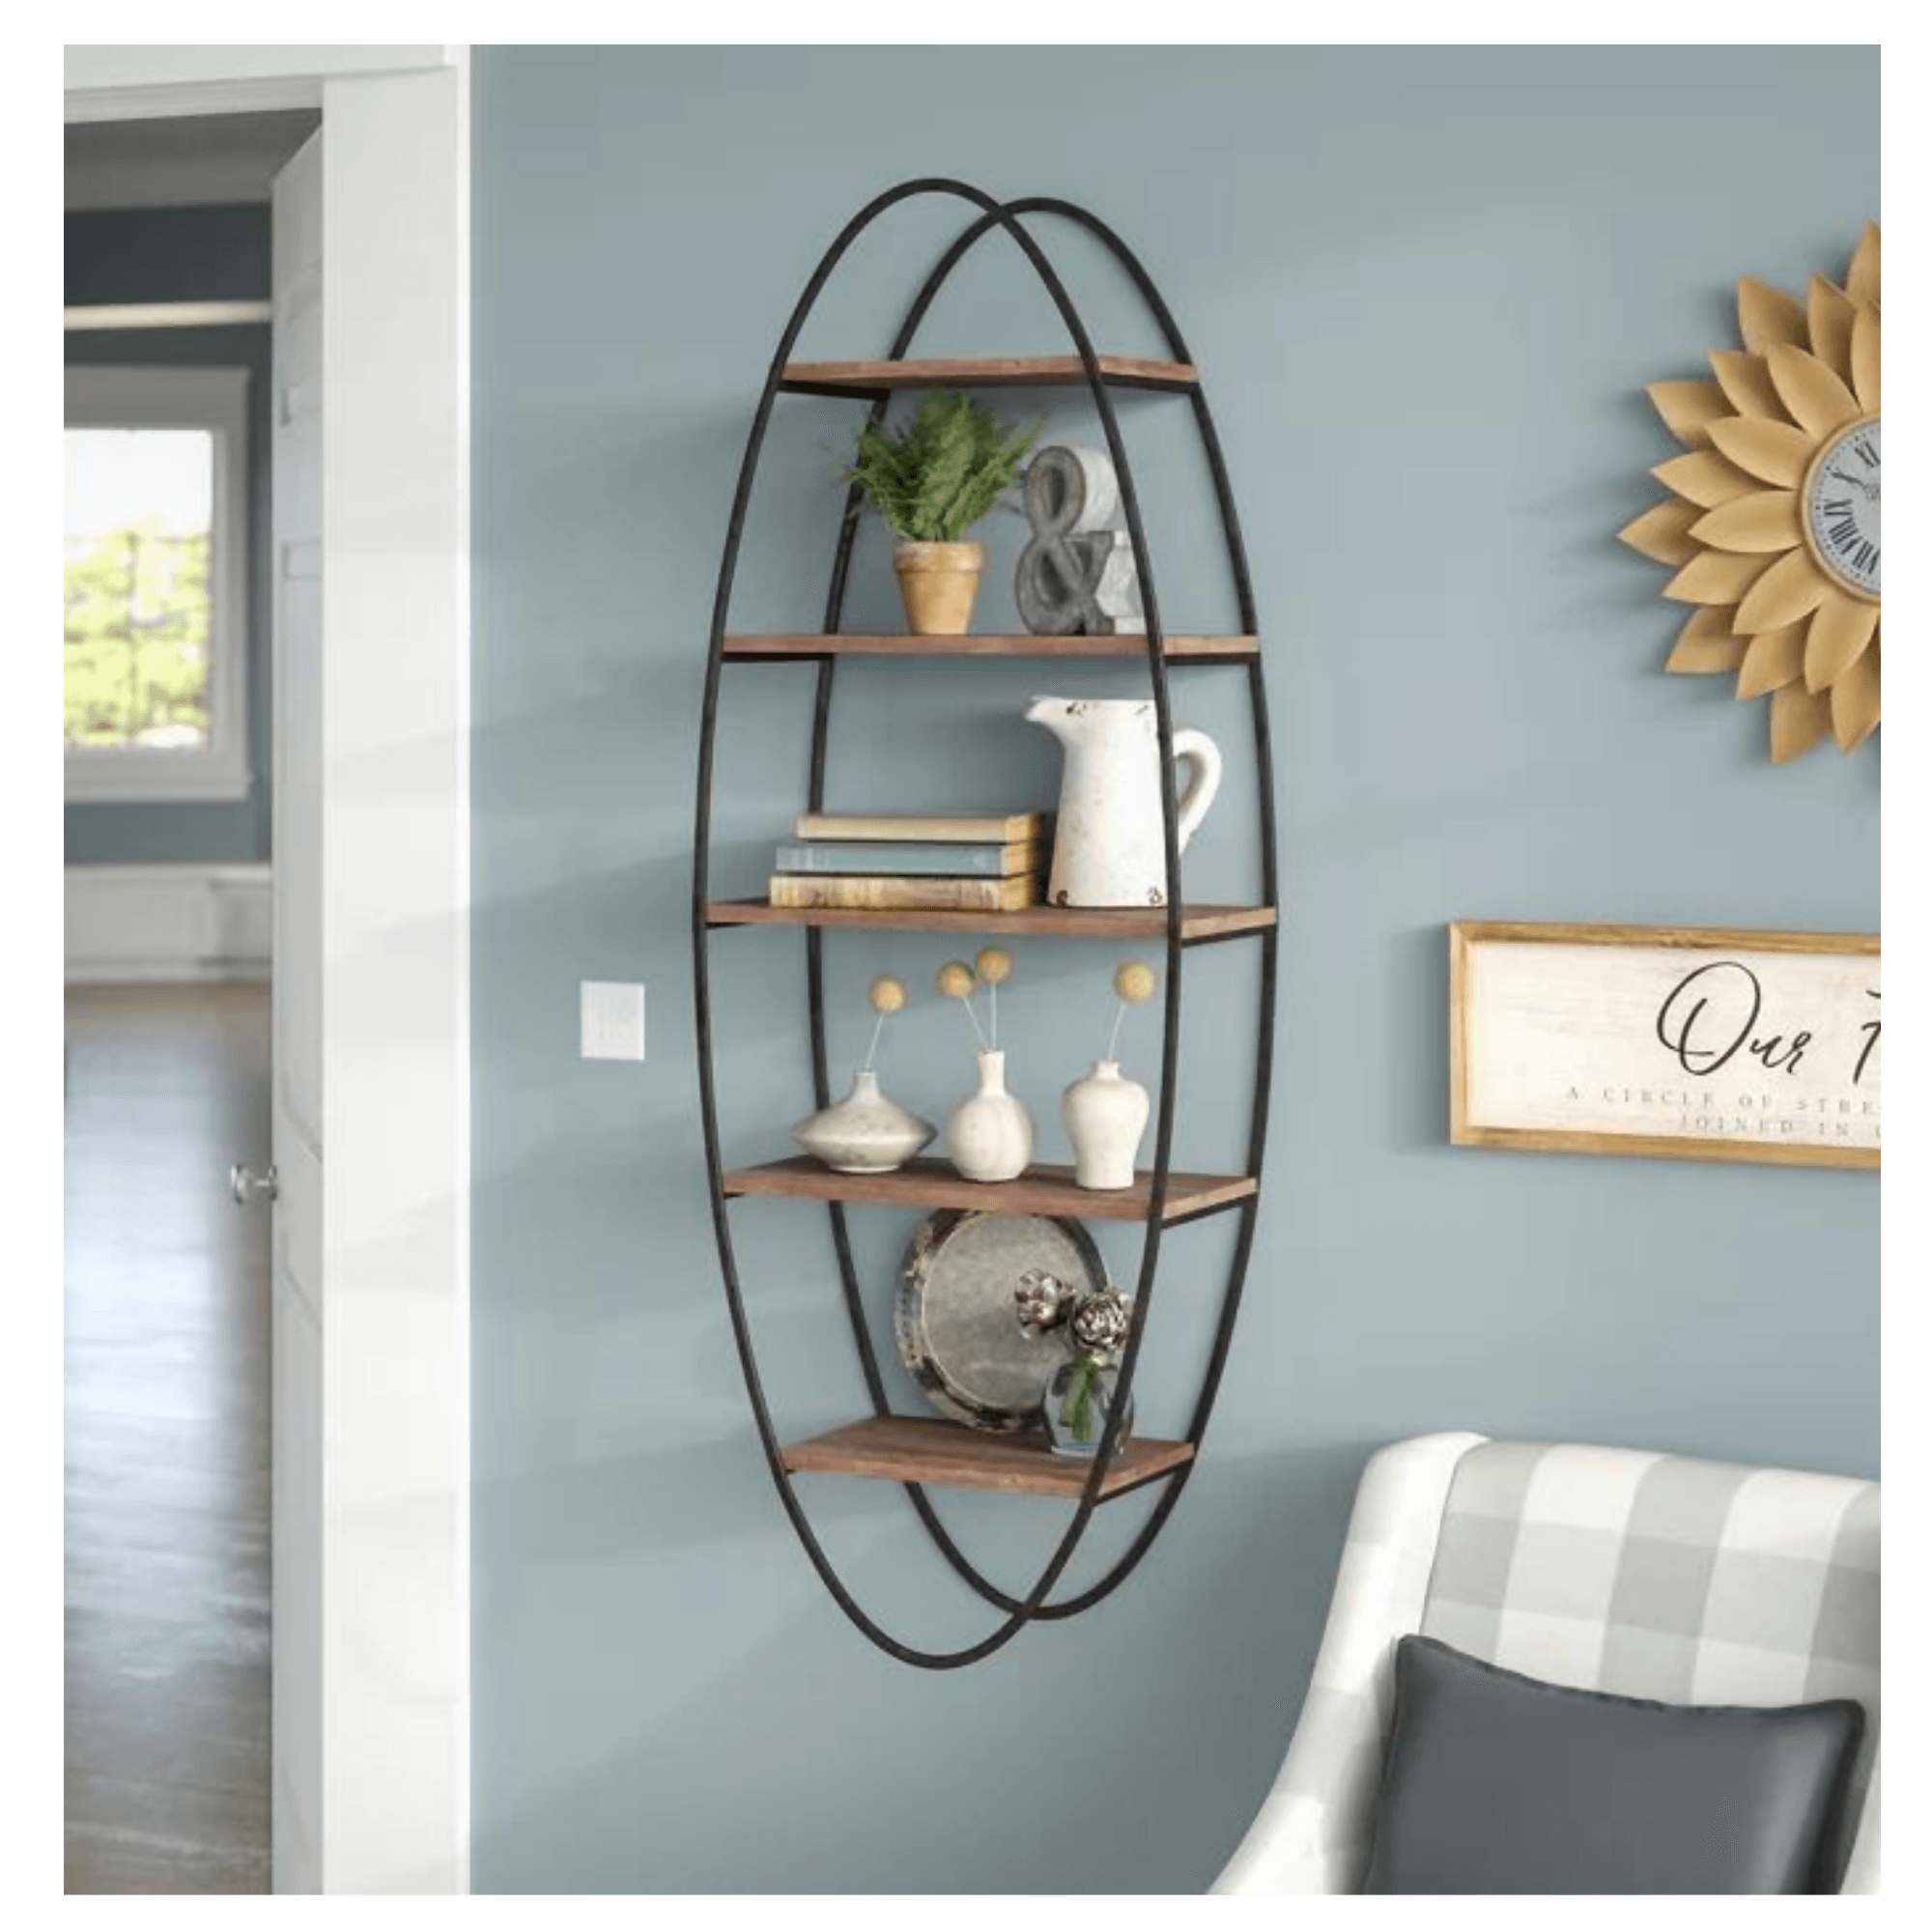 5 Piece Oval Accent Shelf, Accent Shelf Hanging Book Shelves for Living Room, Bedroom, Office, Burned Finish Display Shelves (Black) - ValueBox